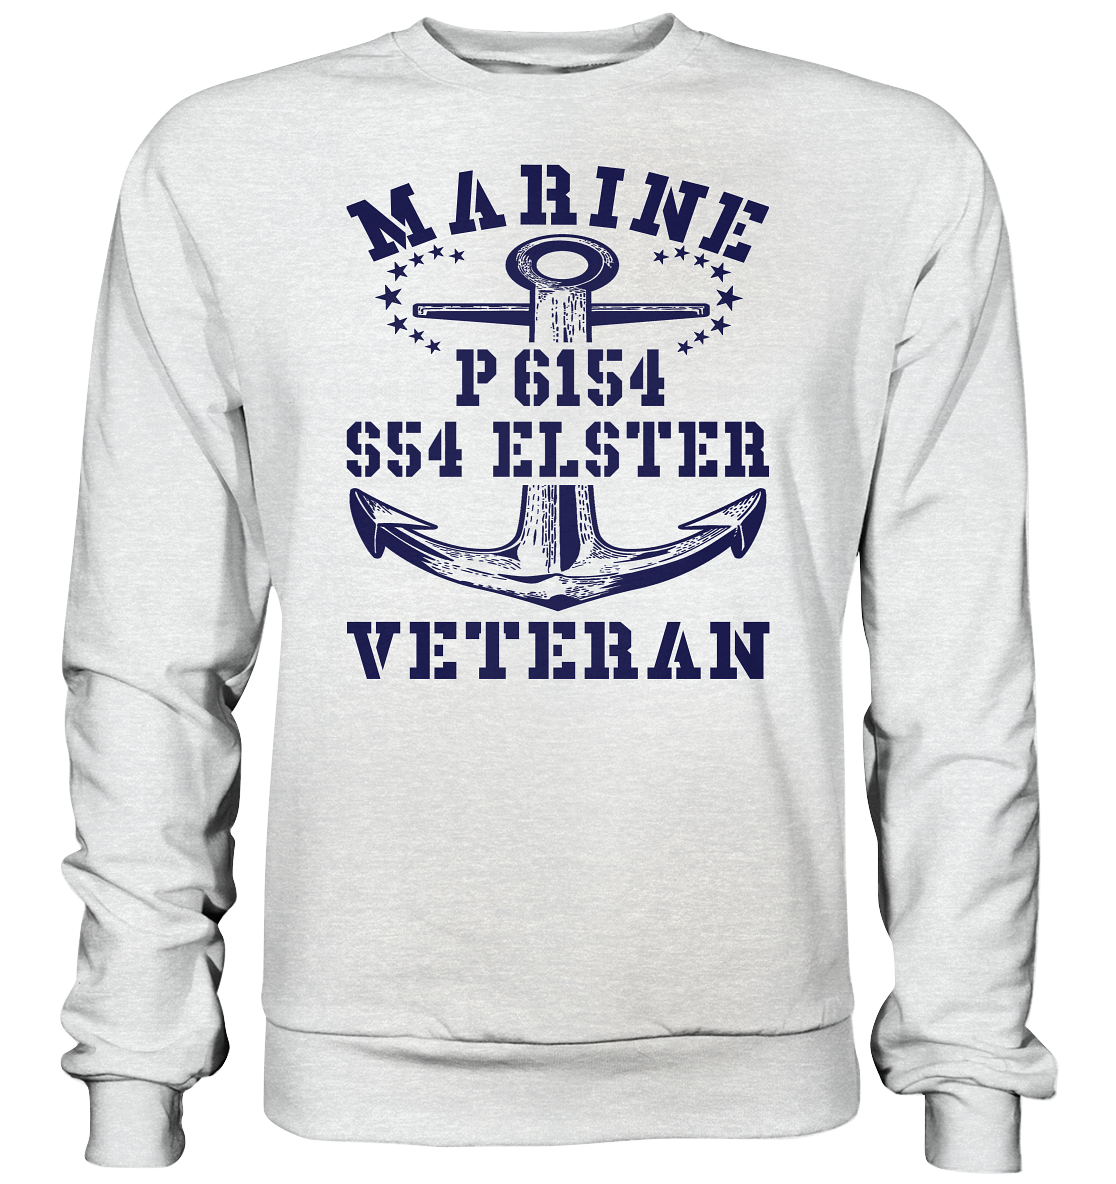 P6154 S54 ELSTER Marine Veteran - Premium Sweatshirt